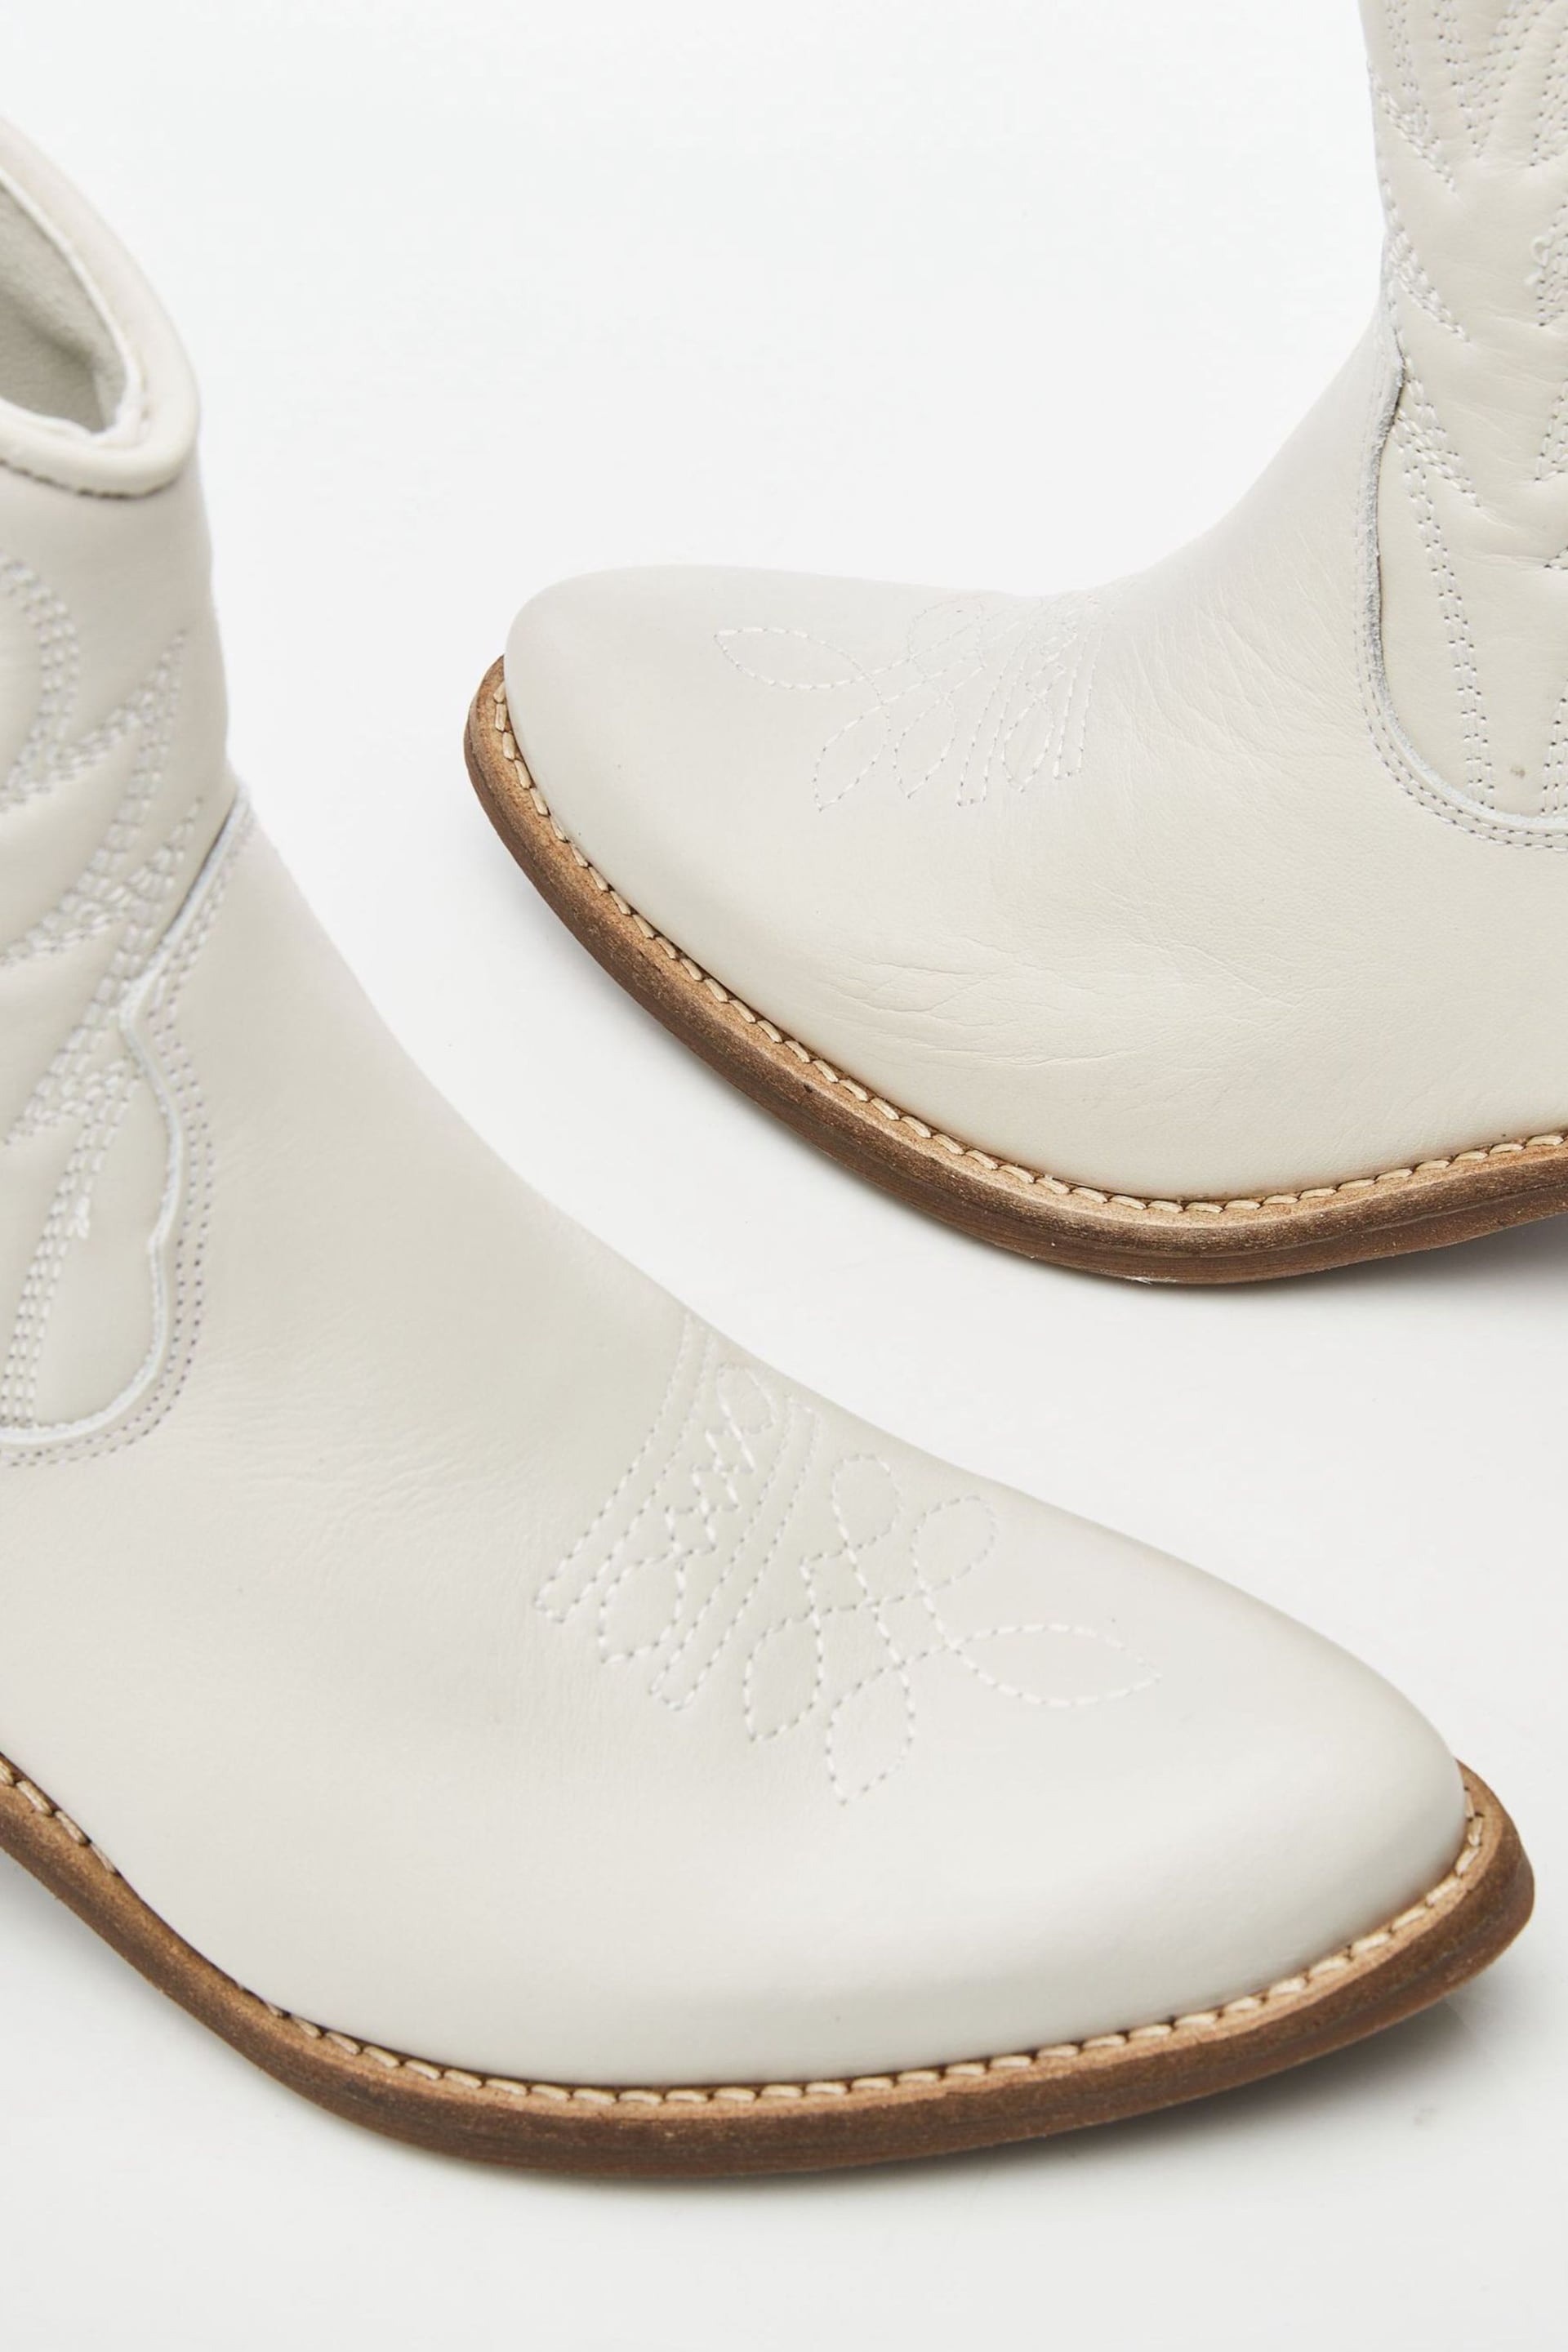 Moda in Pelle Bettsie Ankle Western White Boots - Image 5 of 5